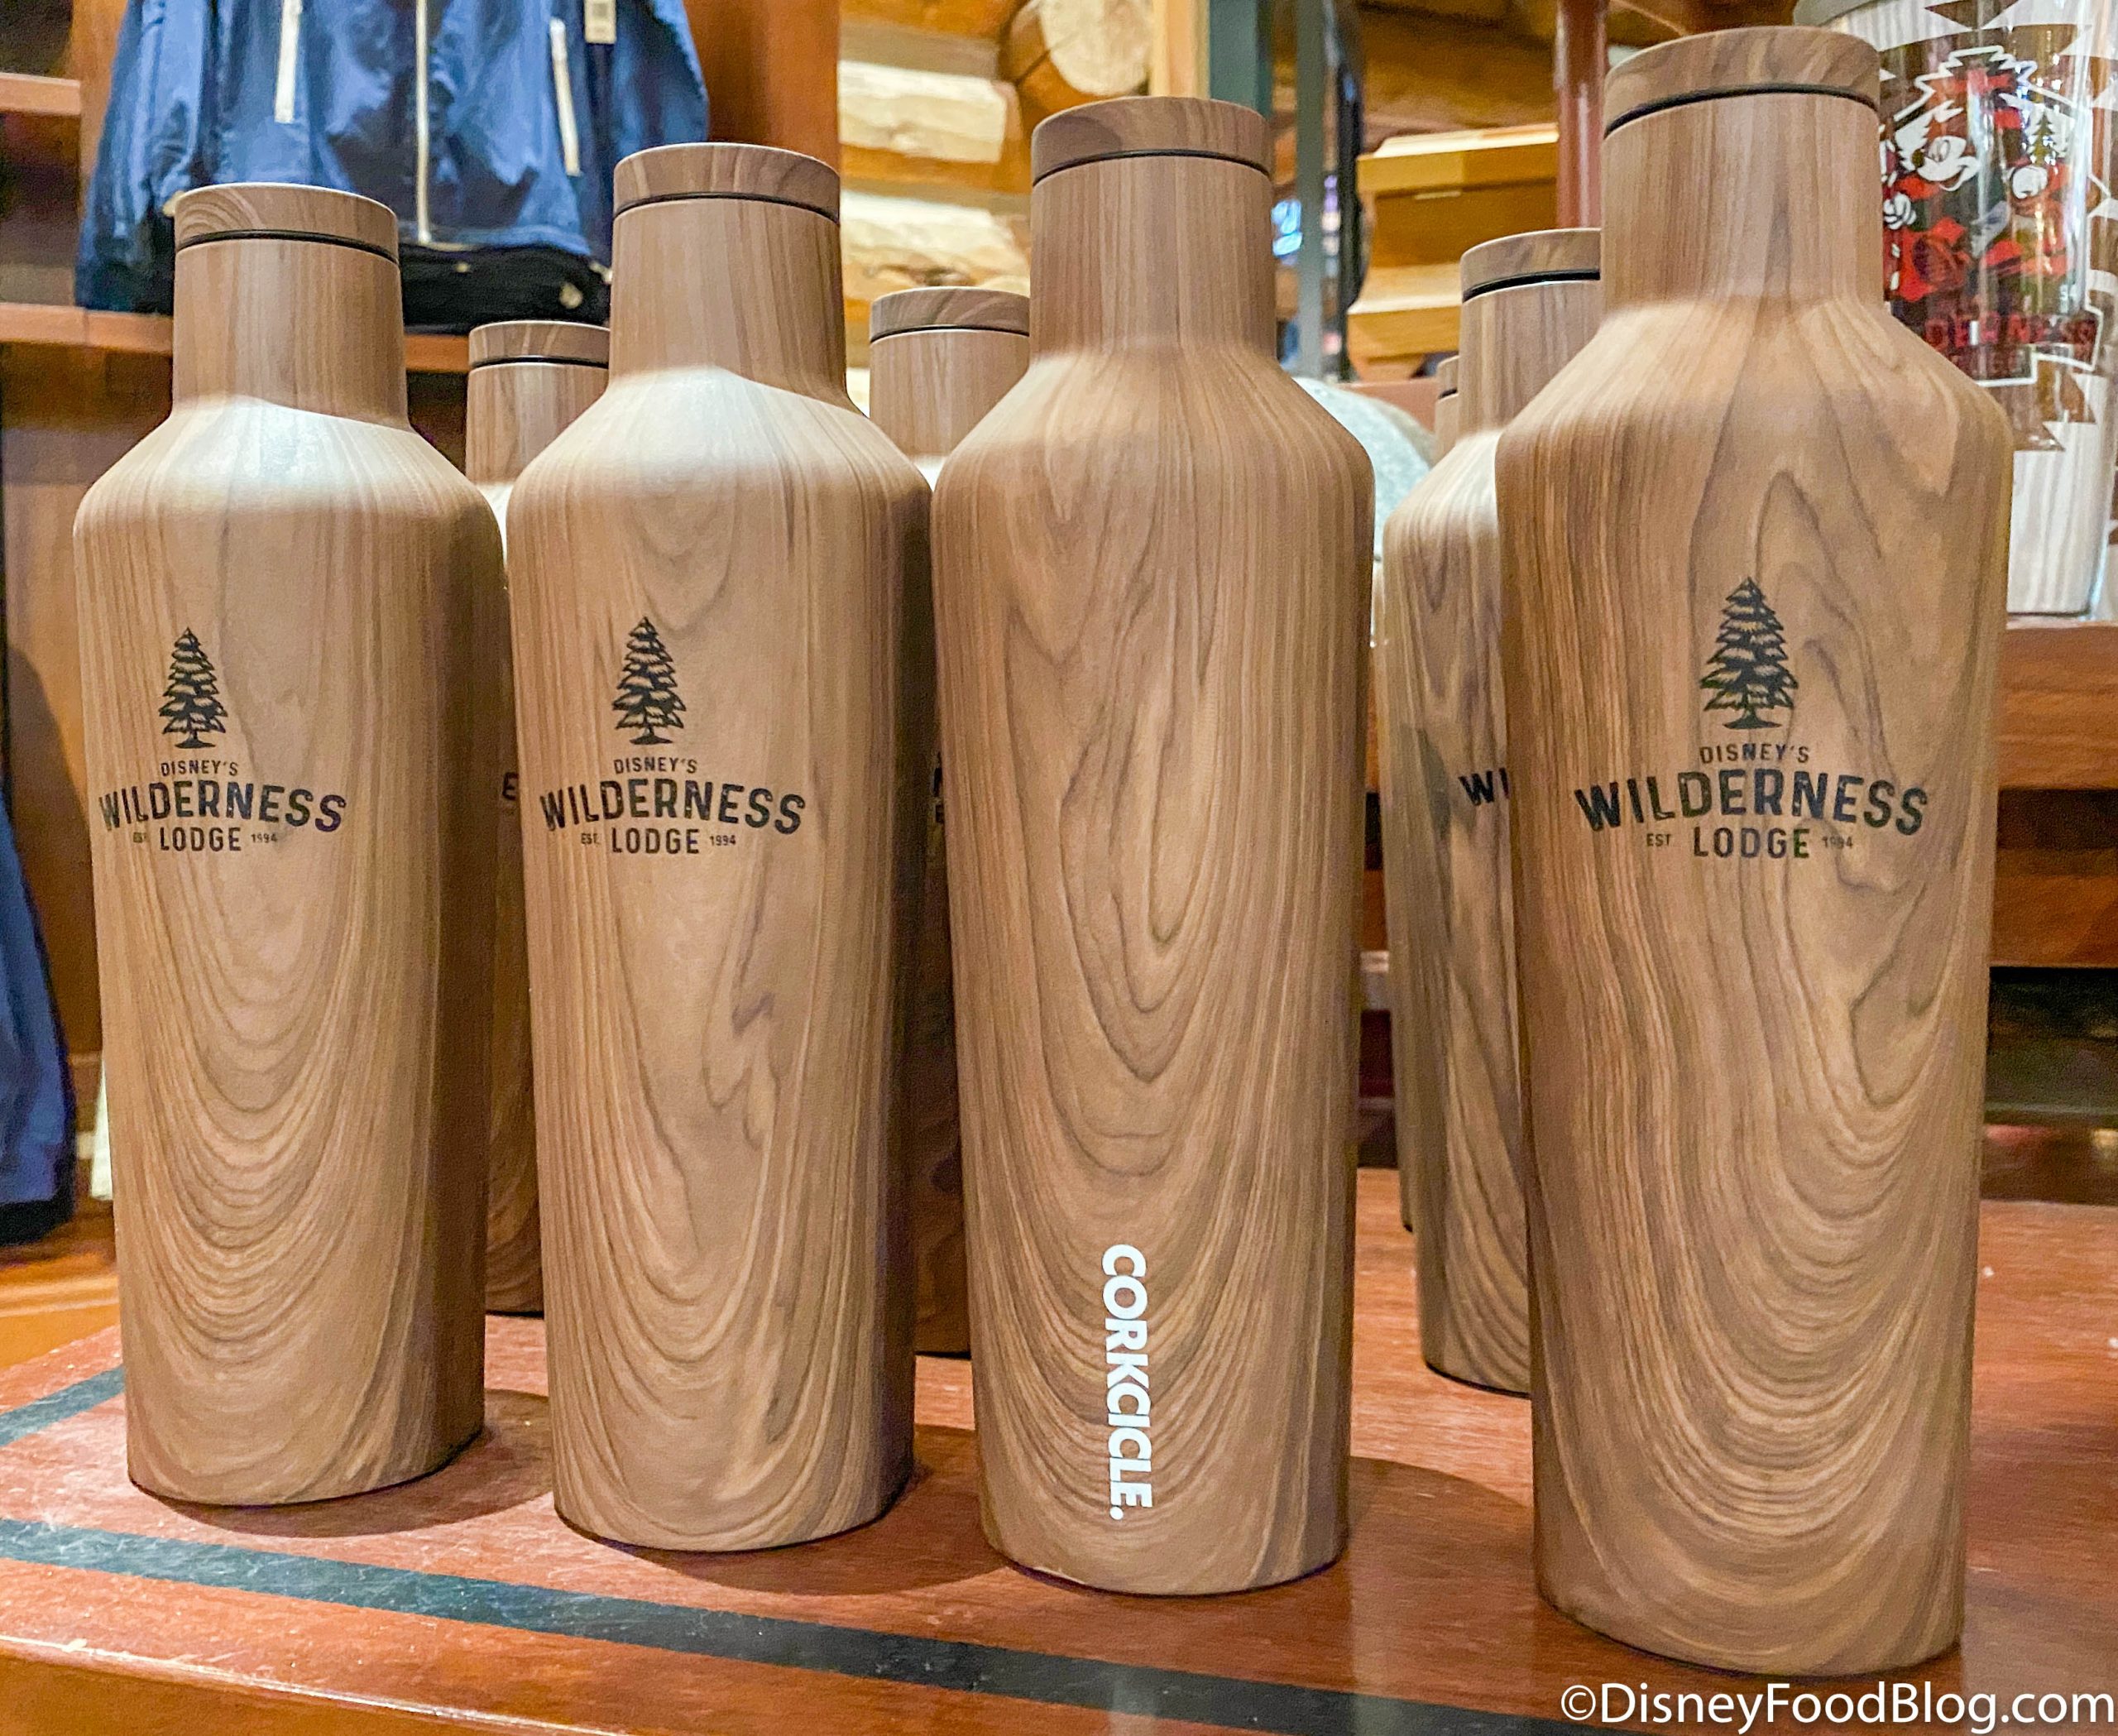 https://www.disneyfoodblog.com/wp-content/uploads/2021/06/2021-wdw-walt-disney-world-disneys-wilderness-lodge-merchandise-gift-shop-corkcicle-bottle-water-bottle-3-scaled.jpg